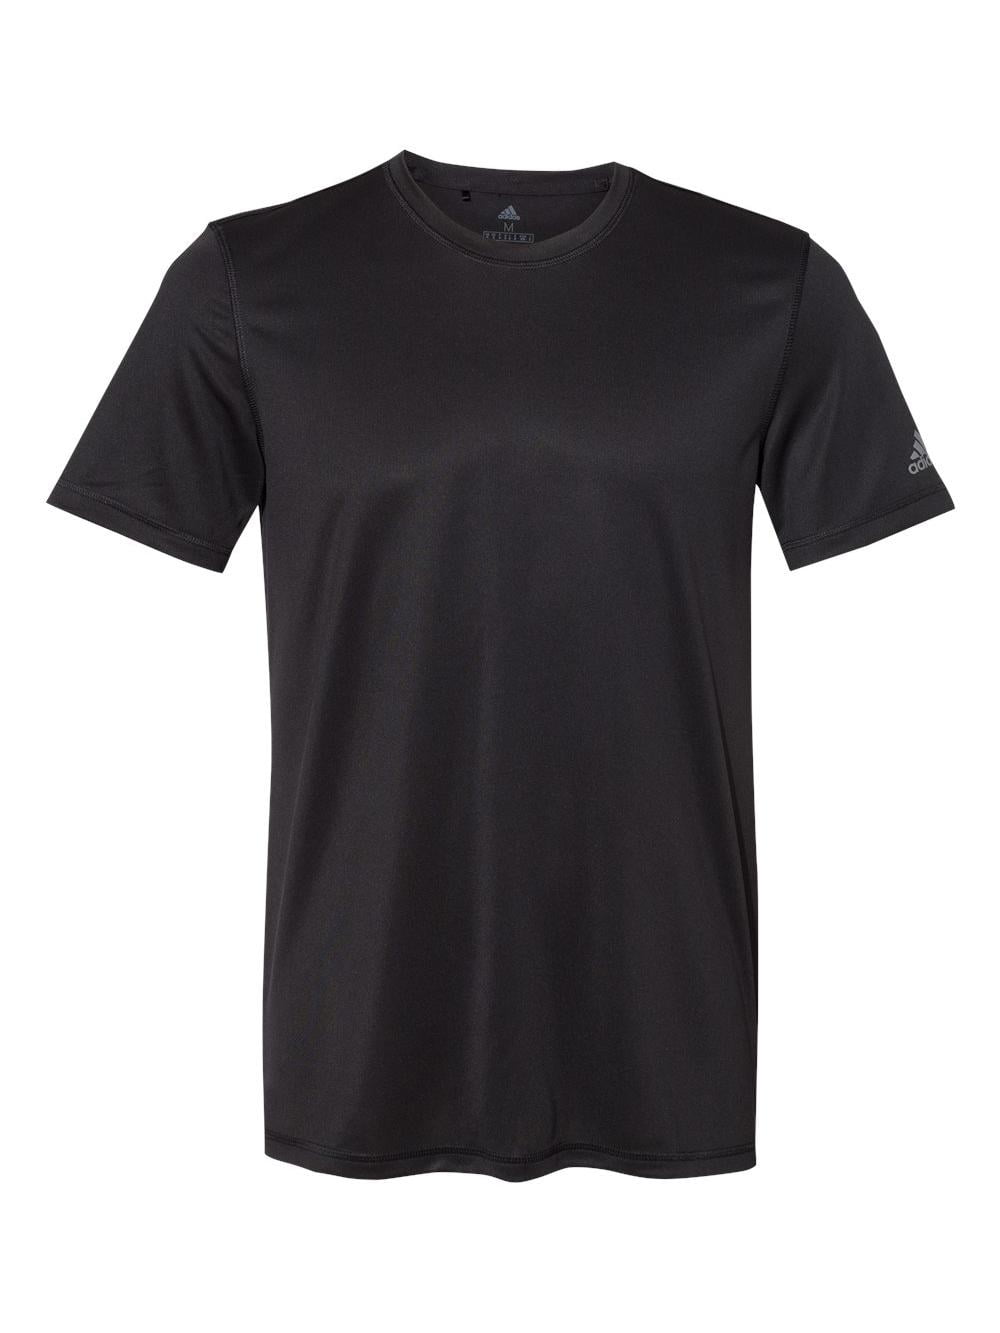 Adidas - Sport T-Shirt - A376 - Black - Size: 3XL